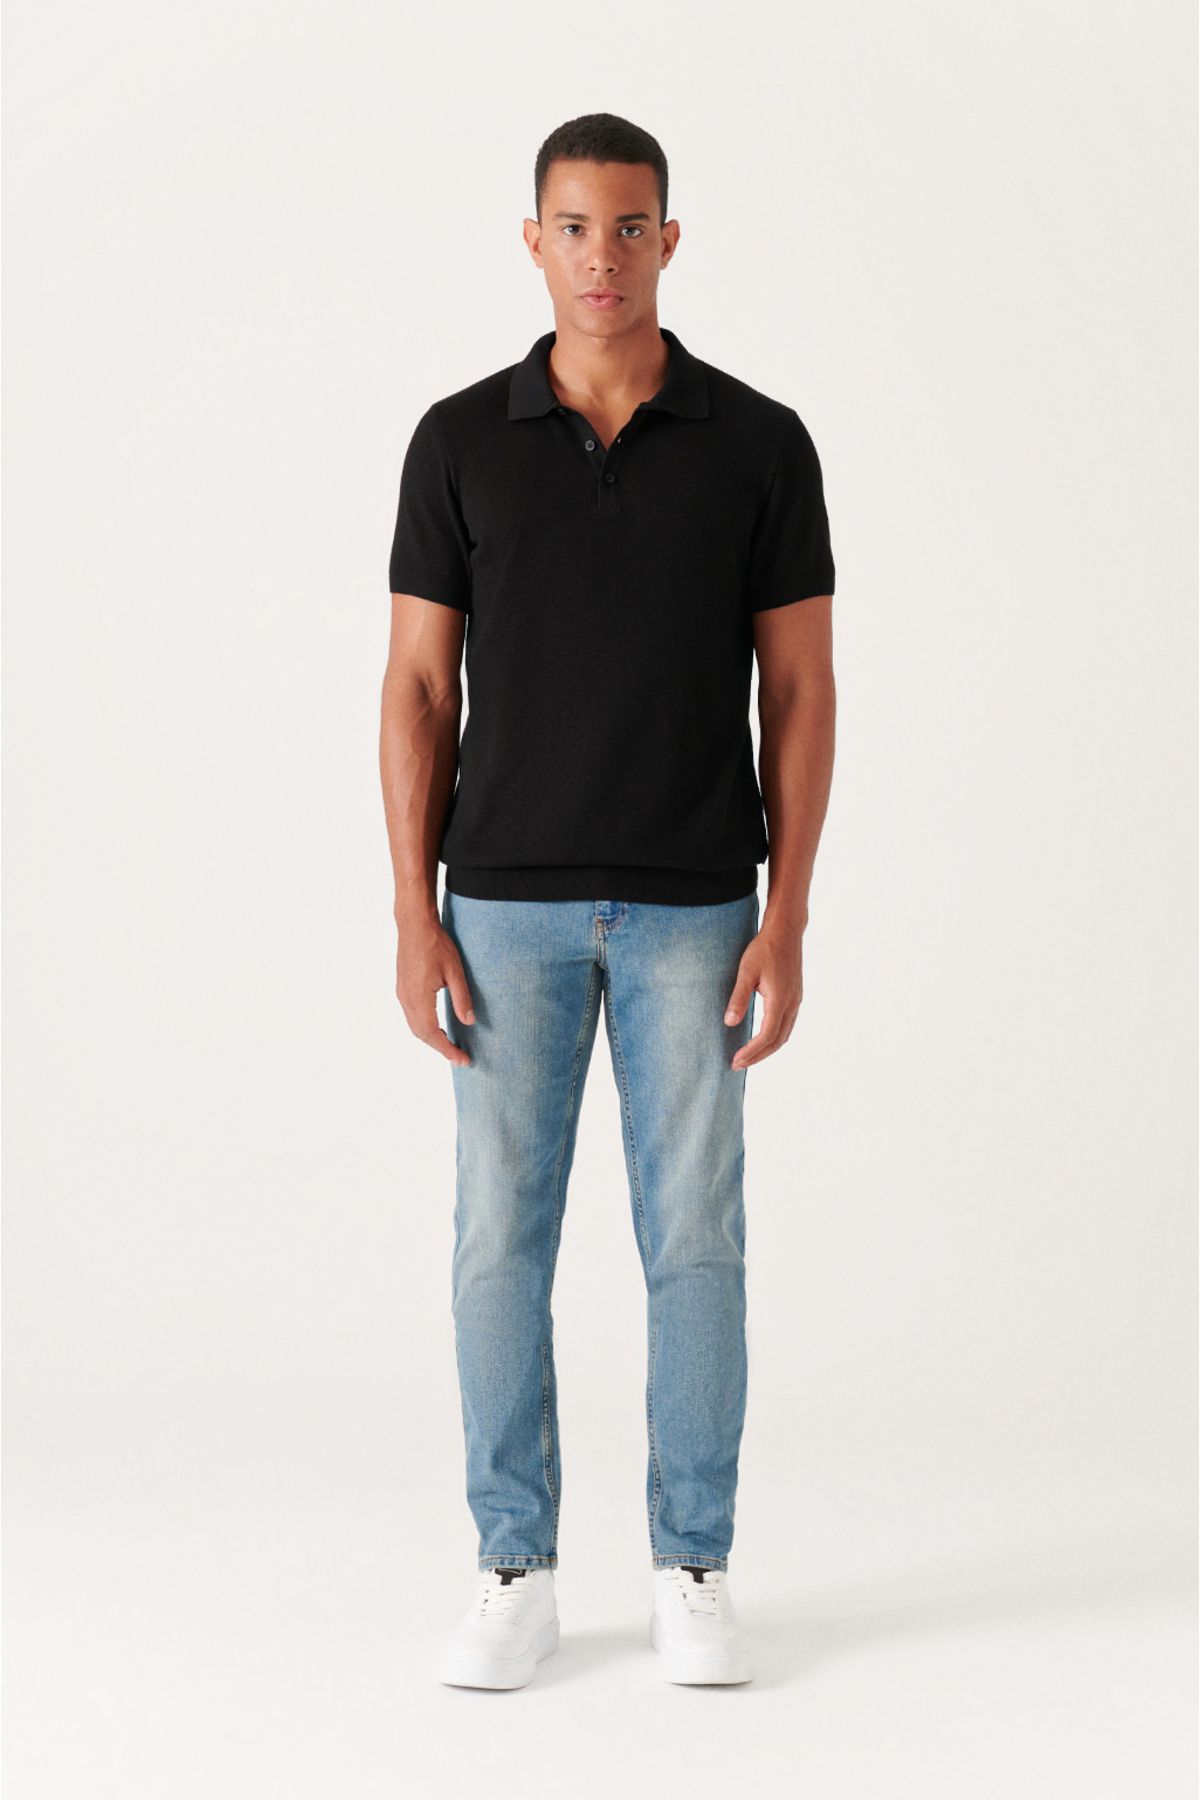 Avva تی شرت بافتنی مردانه یقه چوگان مشکی با بافت استاندارد برش معمولی B005009